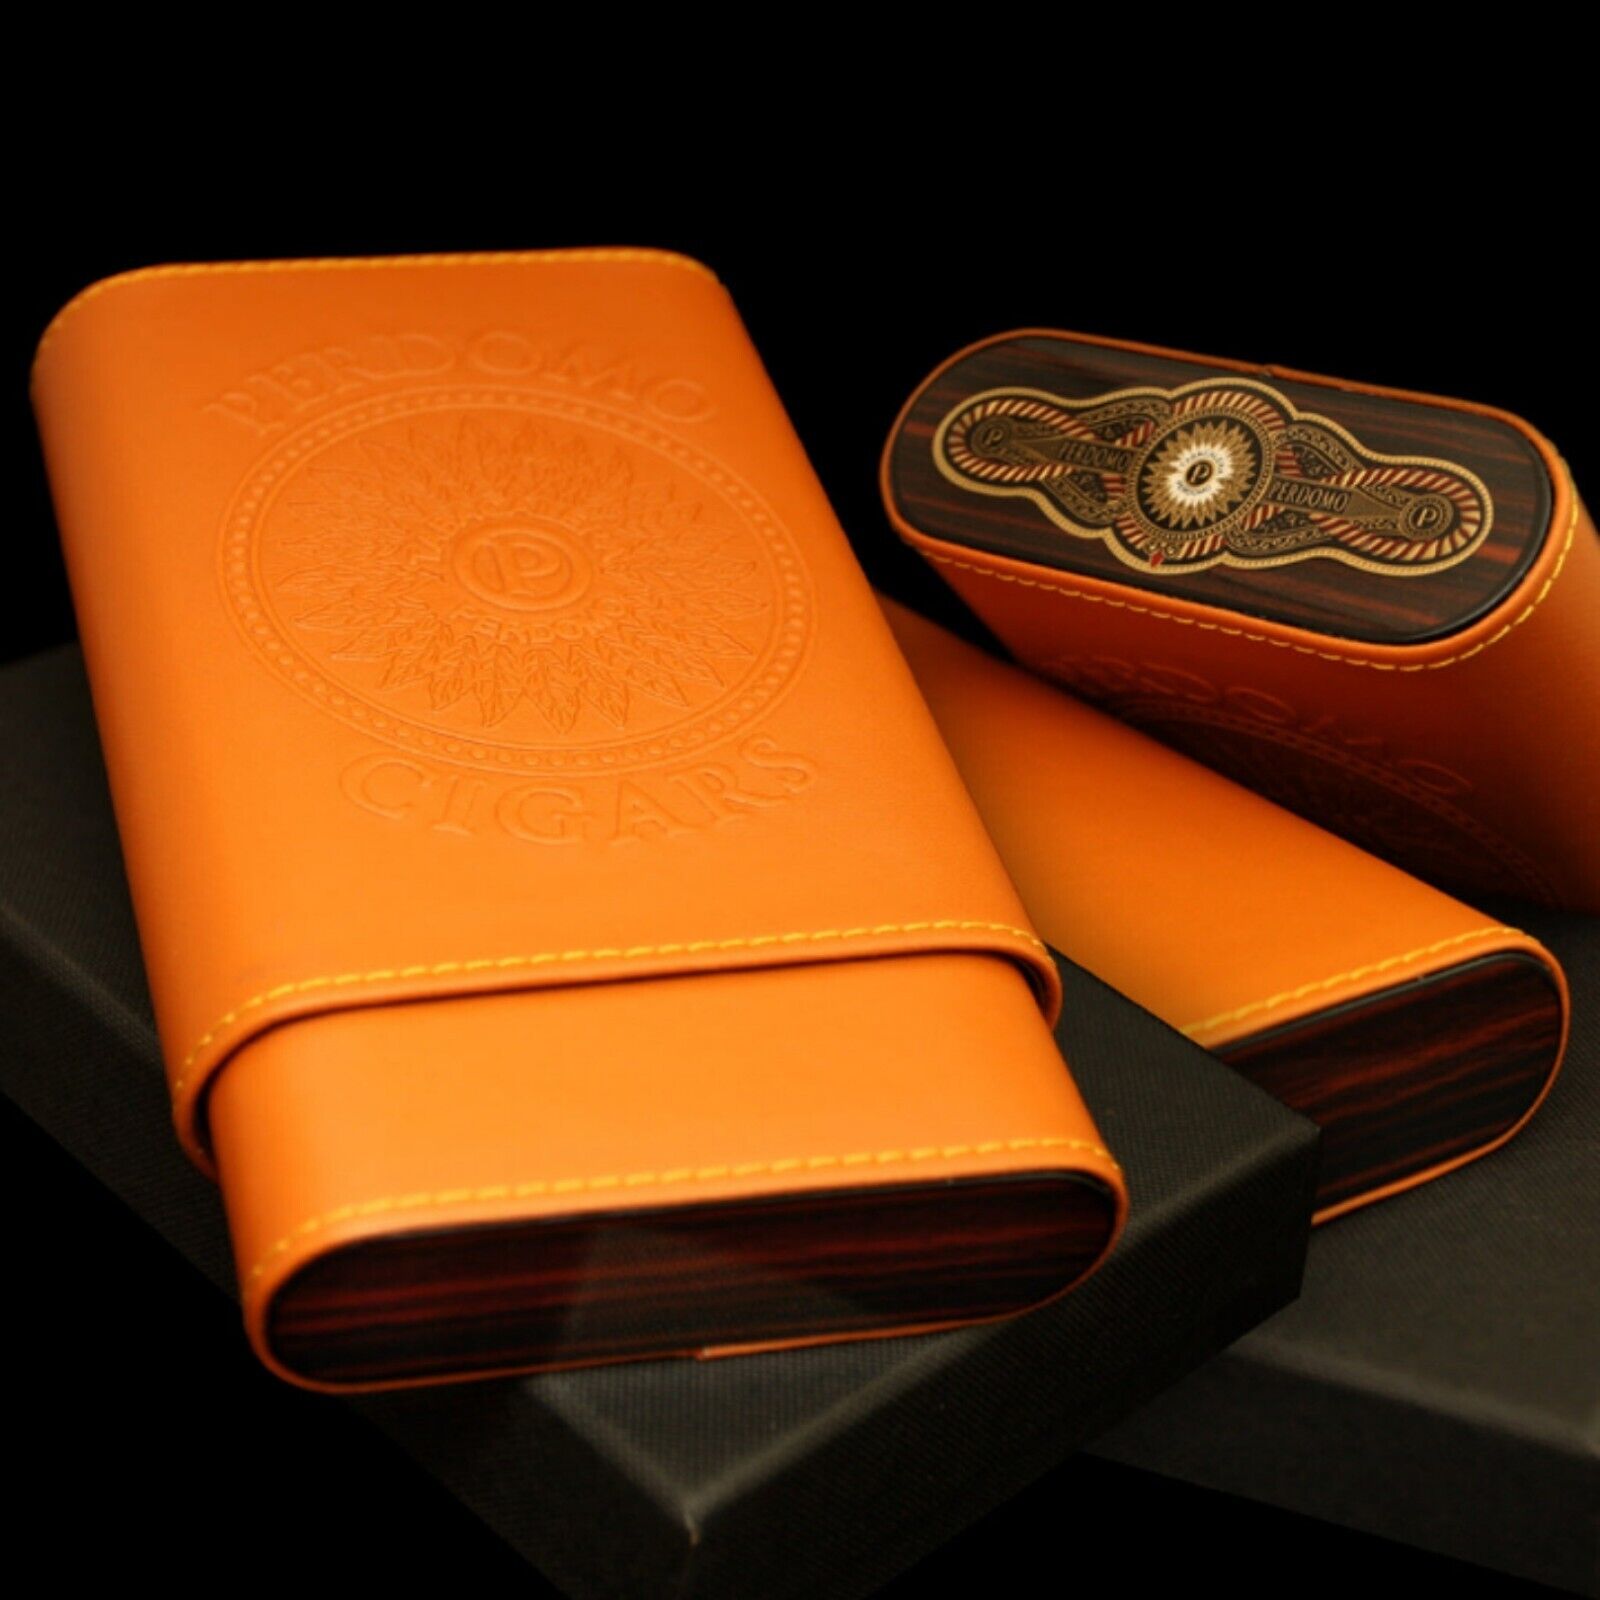 New Perdomo 20th Anniversary Cigar Case Box Gift Soft Orange